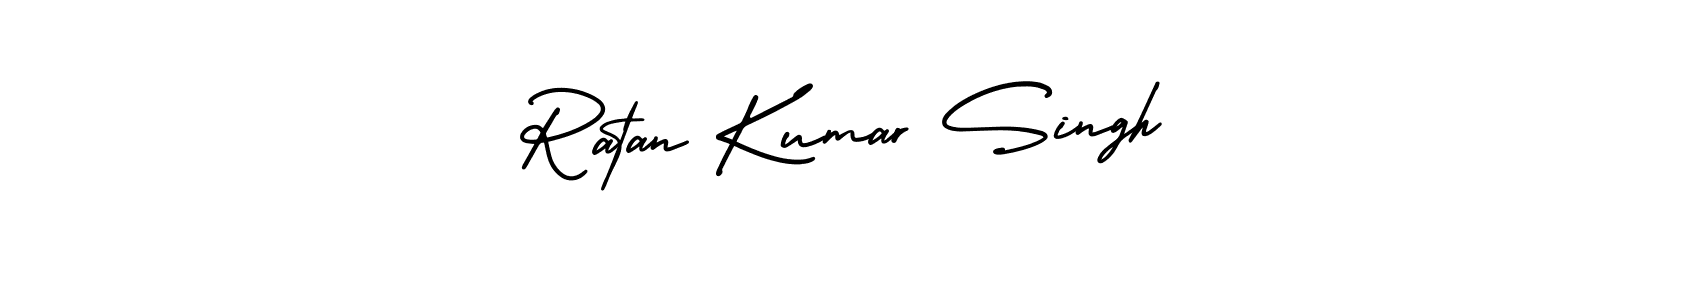 How to Draw Ratan Kumar Singh signature style? AmerikaSignatureDemo-Regular is a latest design signature styles for name Ratan Kumar Singh. Ratan Kumar Singh signature style 3 images and pictures png